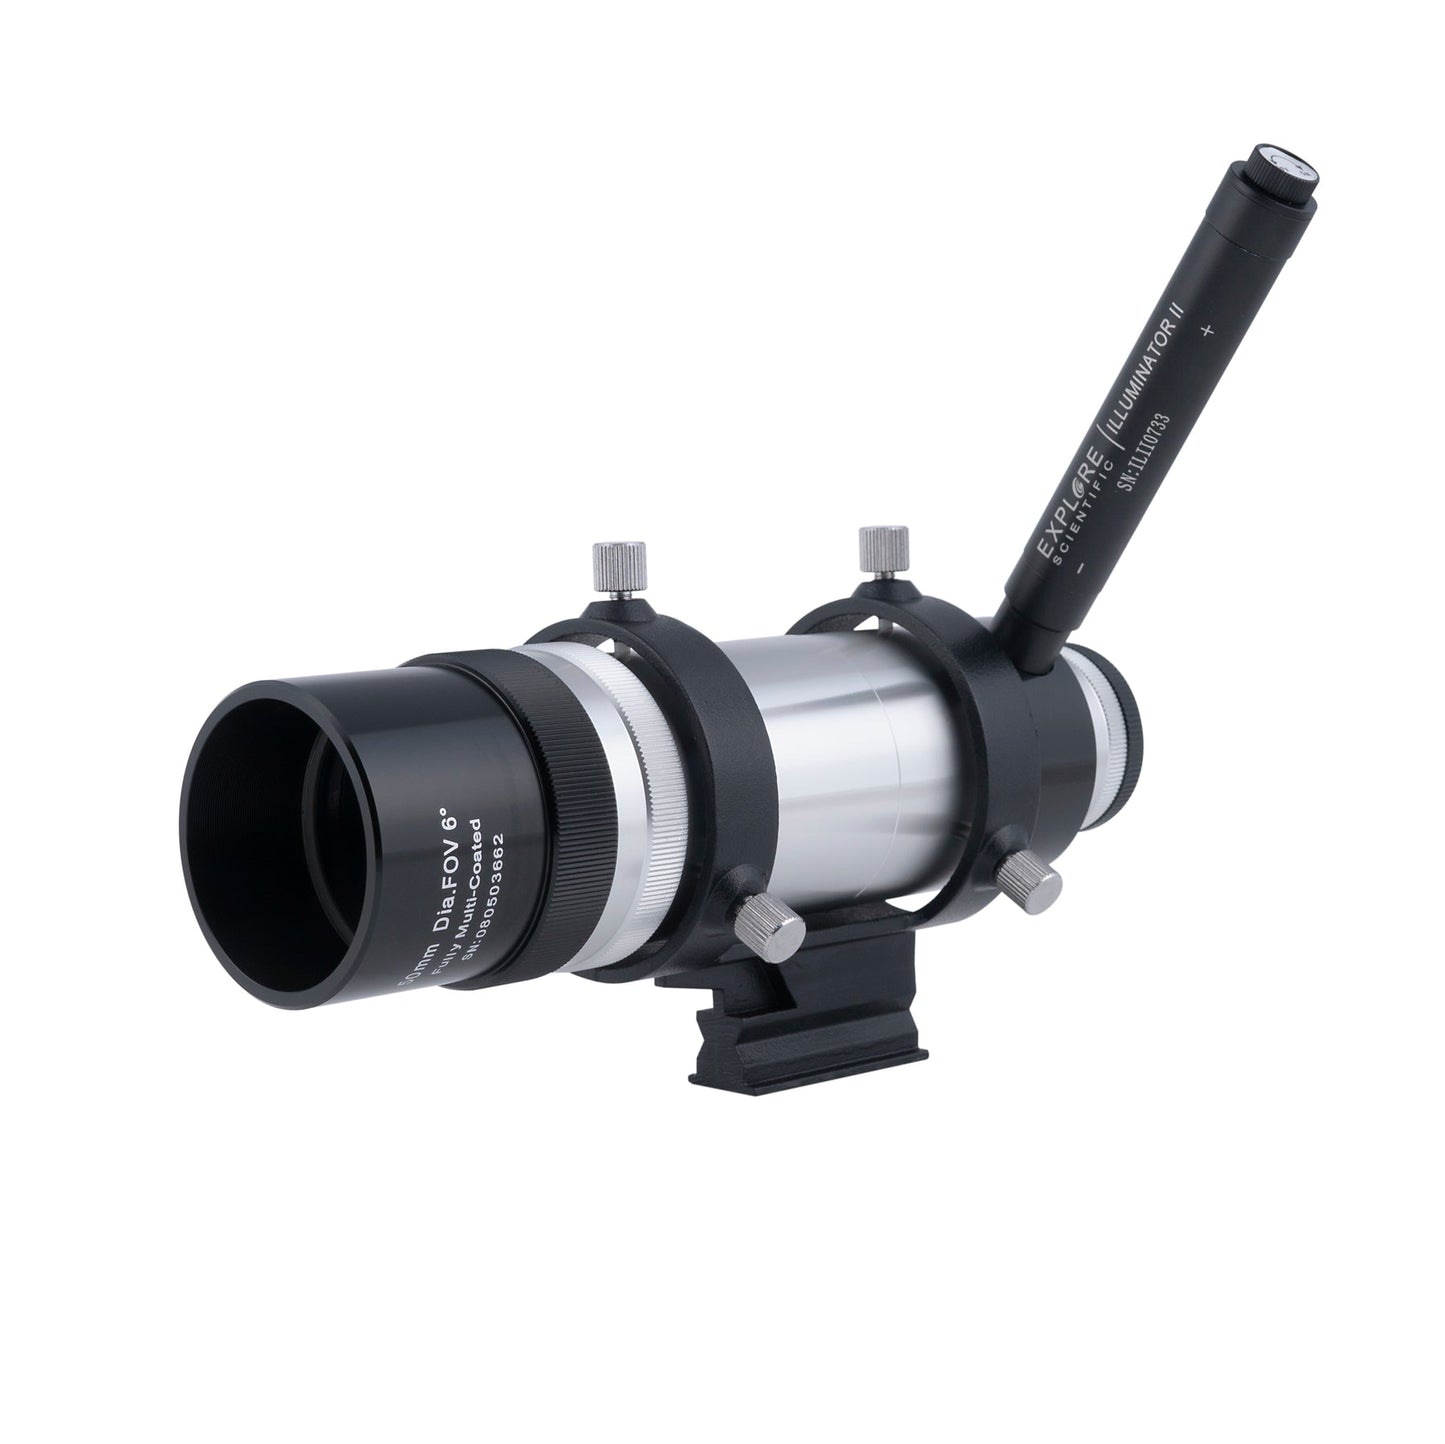 Explore Scientific VFEI0850-01 8x50 Straight Through Illuminated Viewfinder with Bracket and NEW long battery life Illuminator II